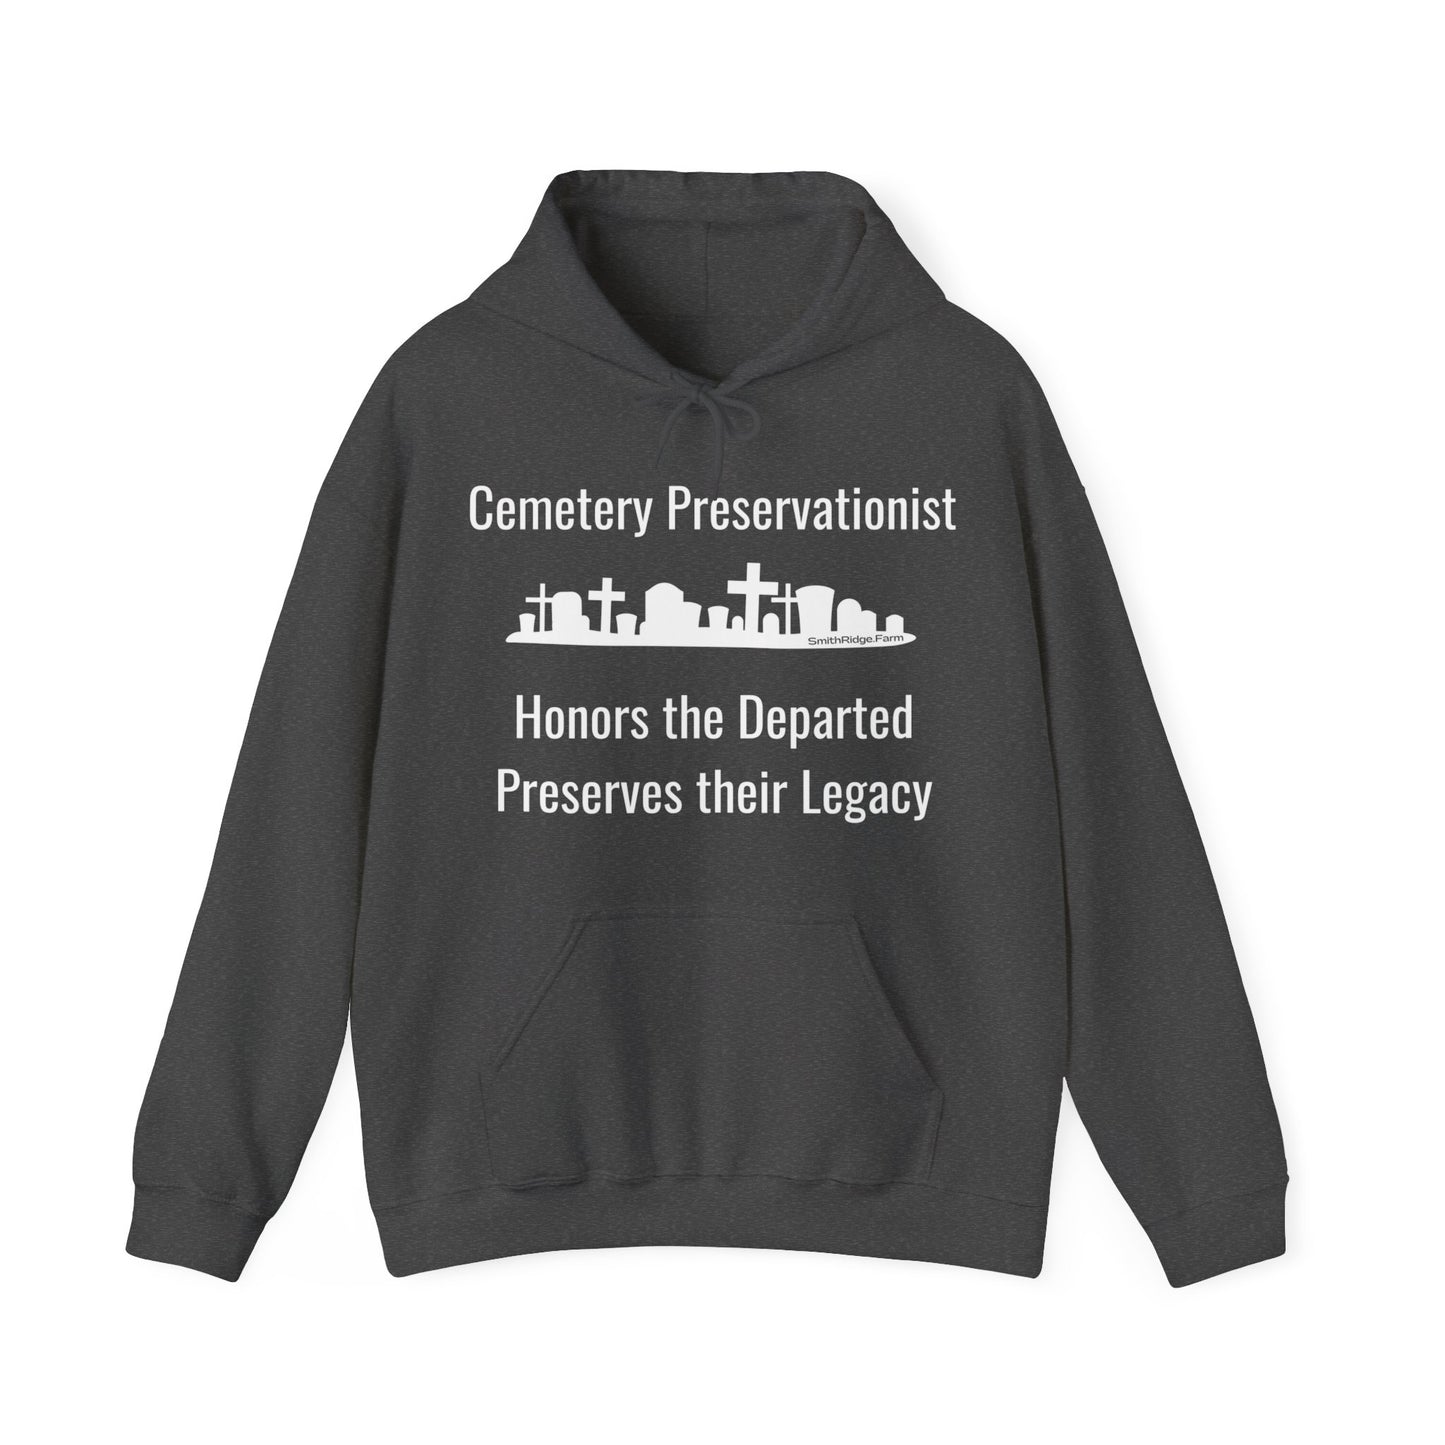 Cemetery Preservationist, Honors the Departed, Preserves their Legacy Hooded Sweatshirt